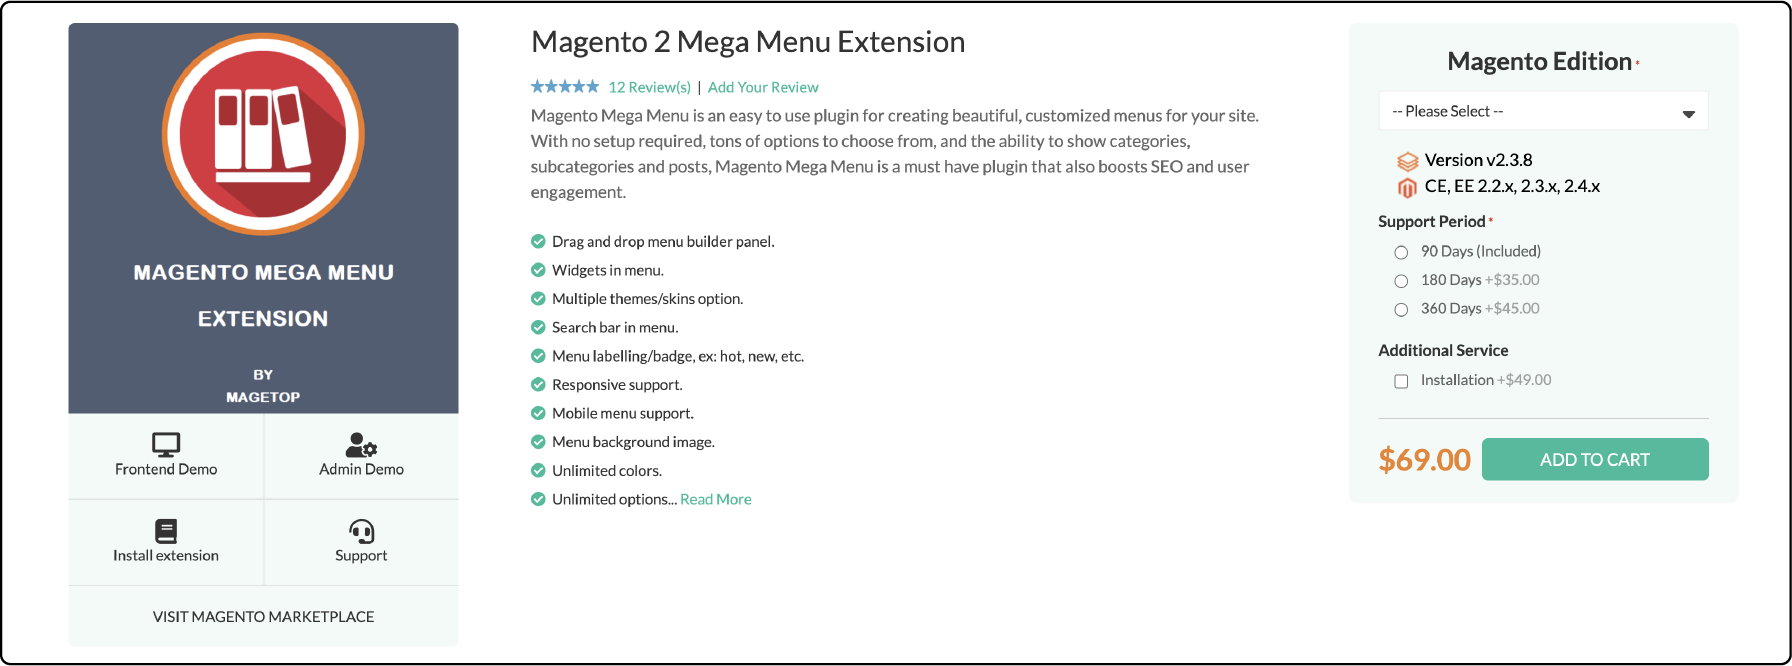 Magetop's Comprehensive Mega Menu Extension for Magento 2